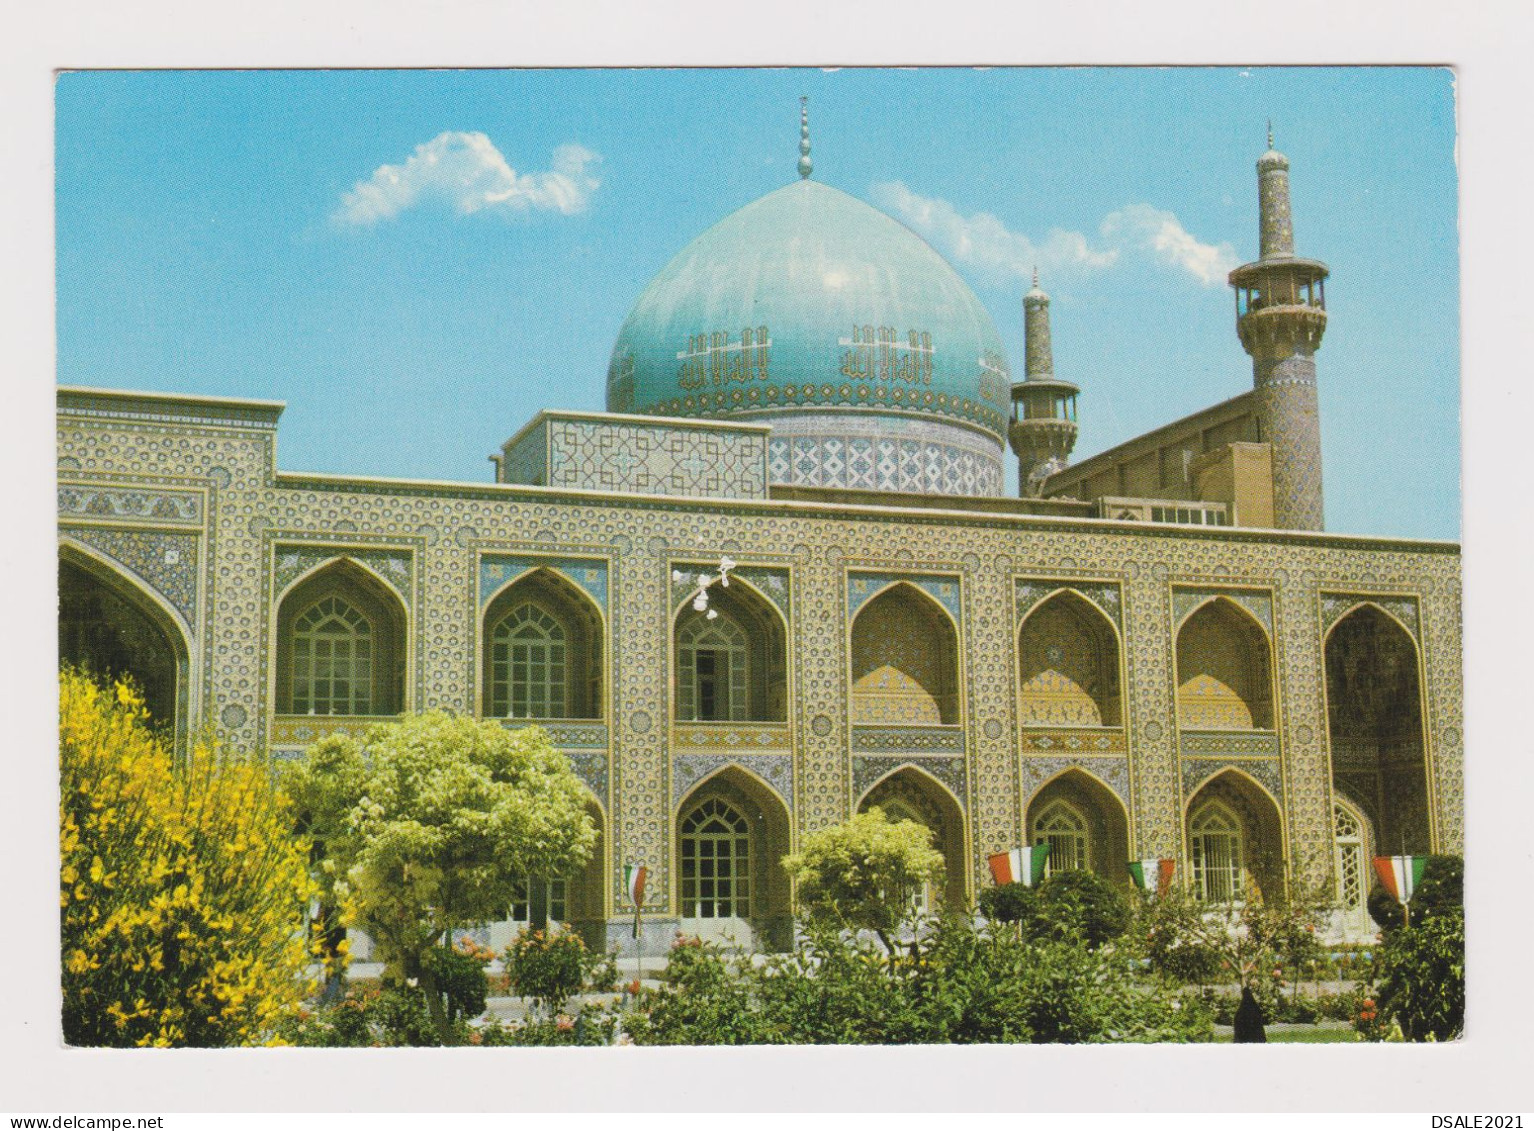 IRAN Astaneh, Astaneh-ye Ashrafiyeh, Mosque View Vintage Photo Postcard RPPc (67343) - Iran